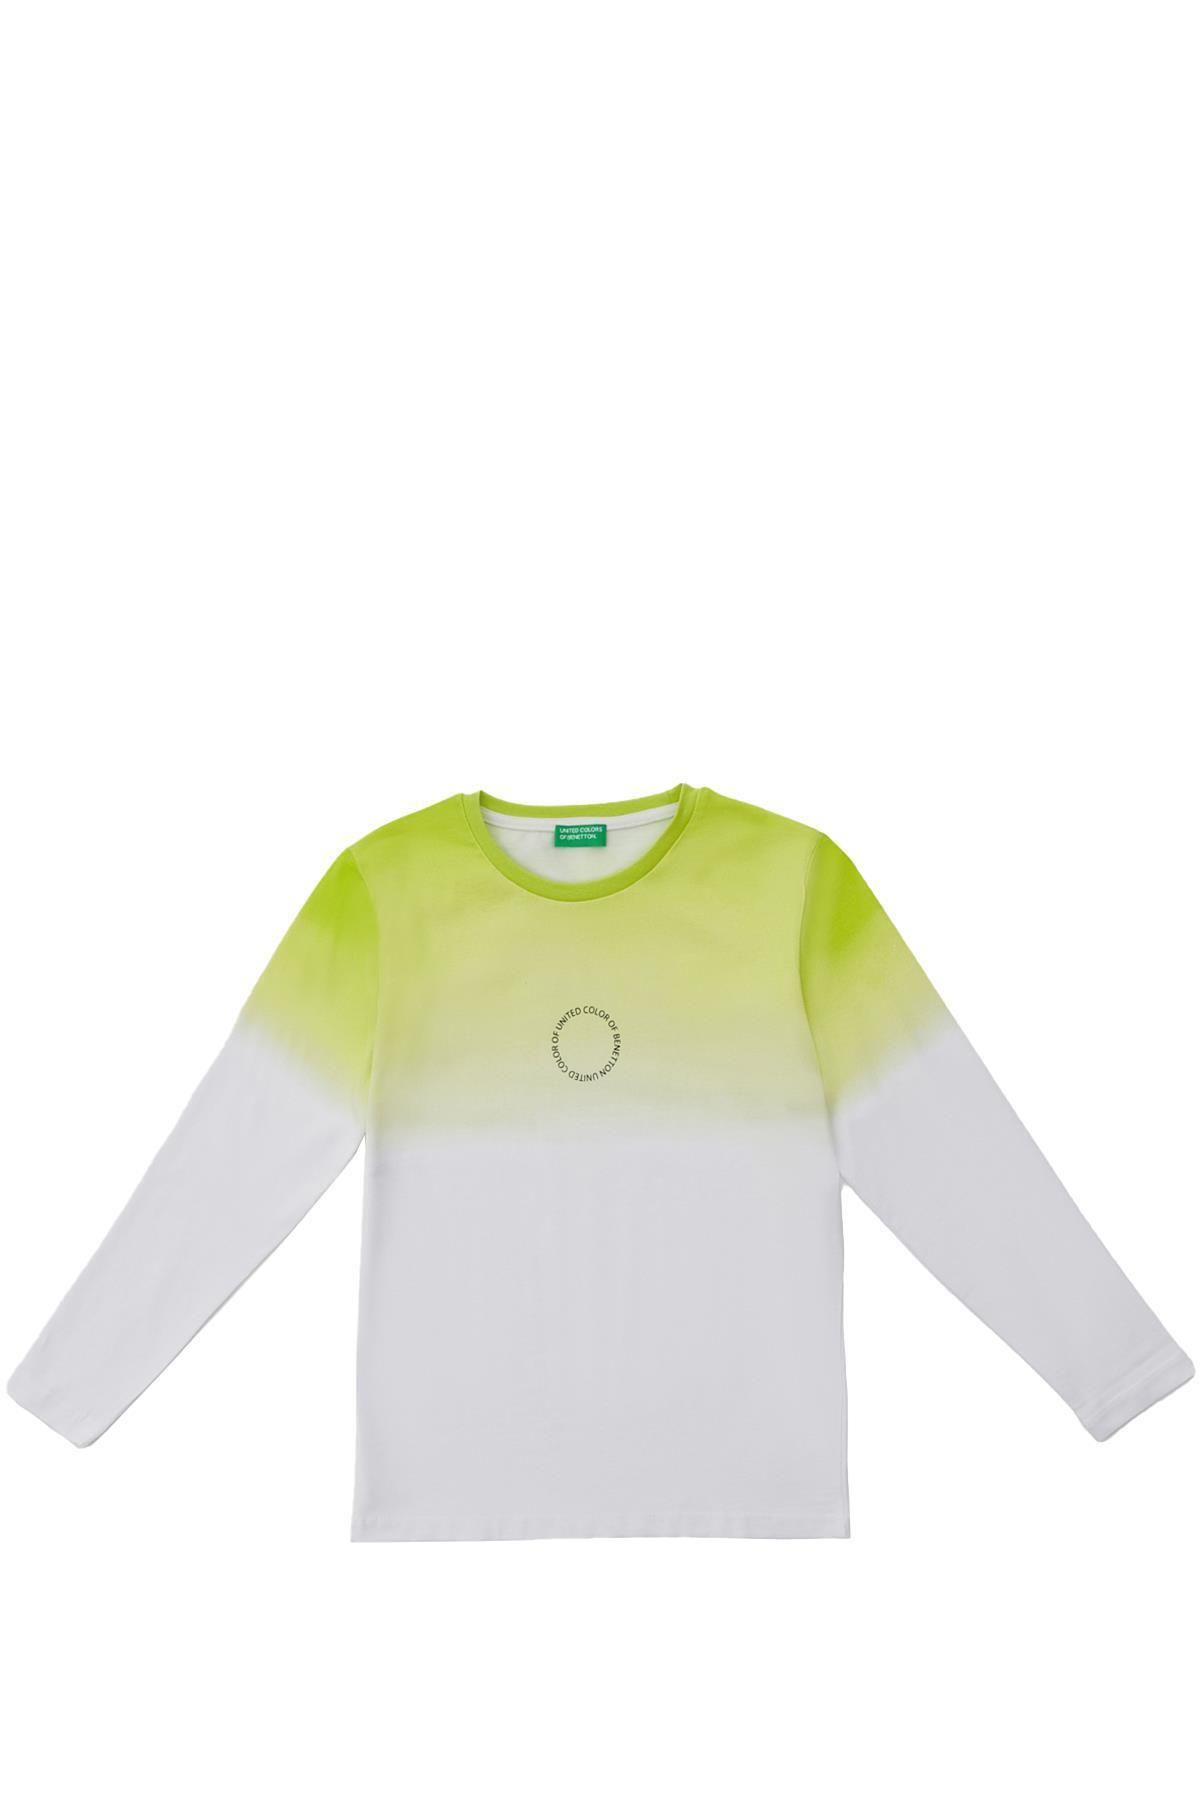 United Colors of Benetton Erkek Çocuk Sweatshirt